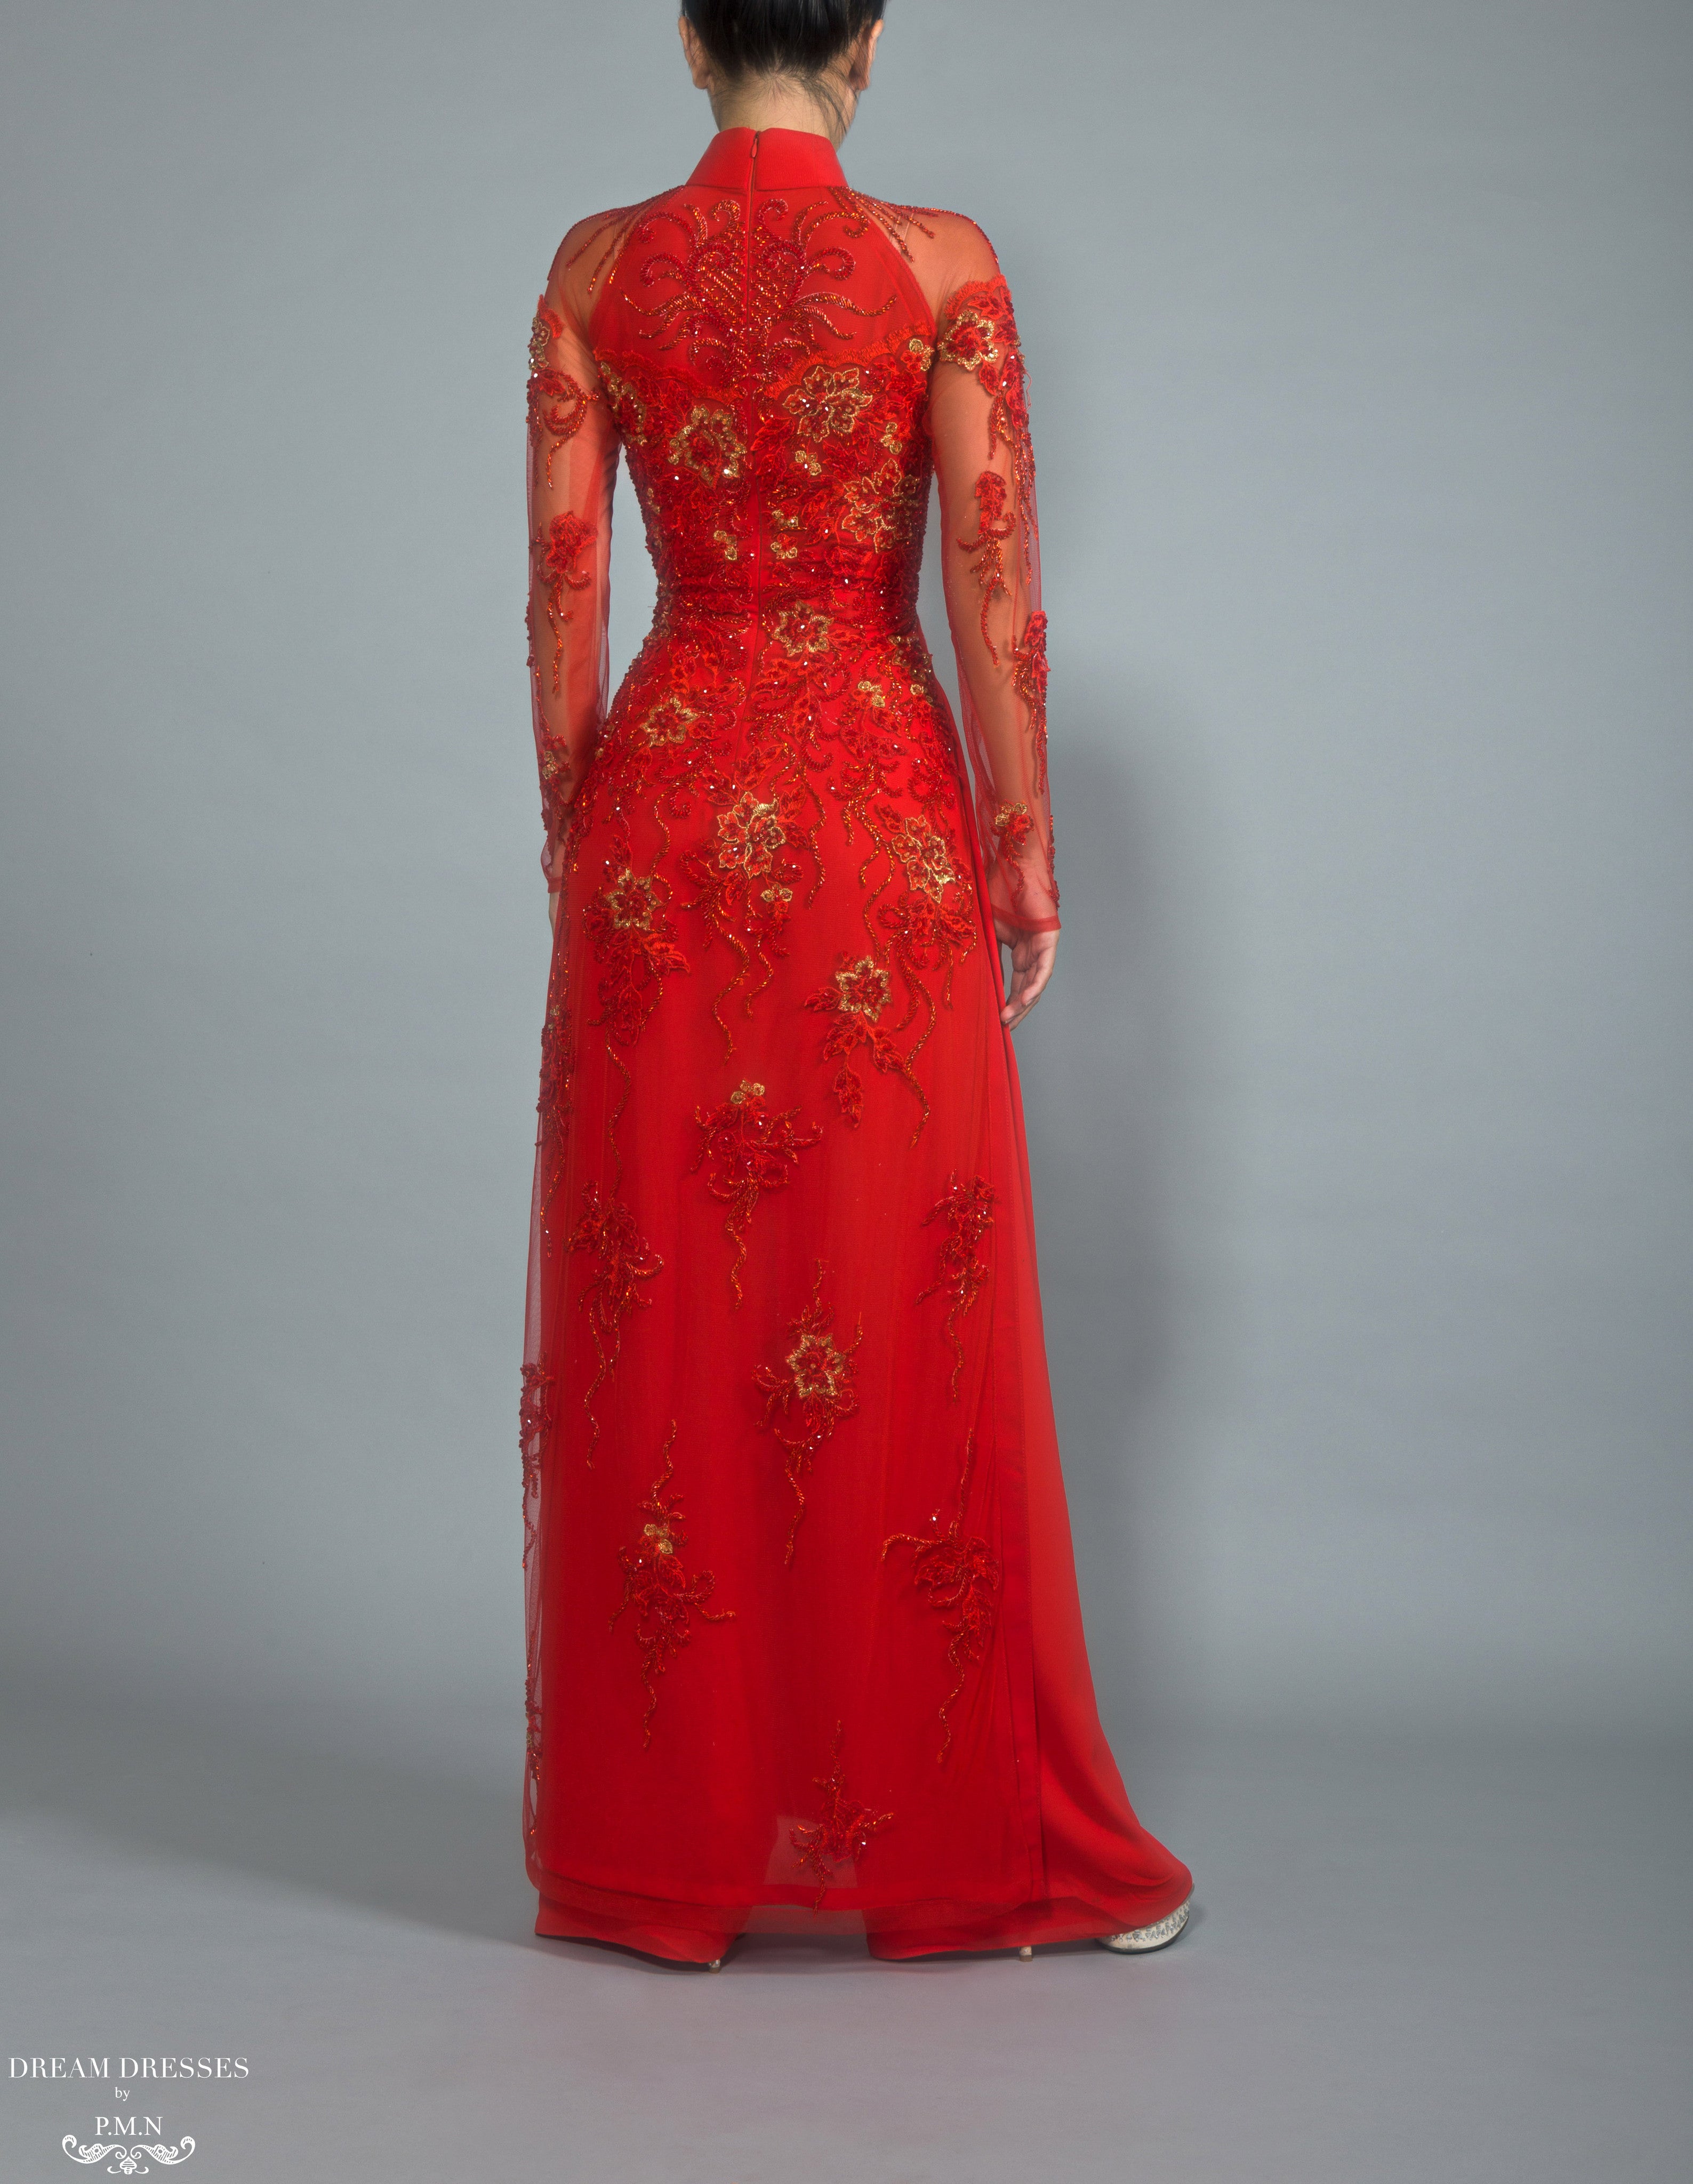 Red Bridal Ao Dai | Vietnamese Lace Bridal Dress | Dream Dresses by P.M.N.